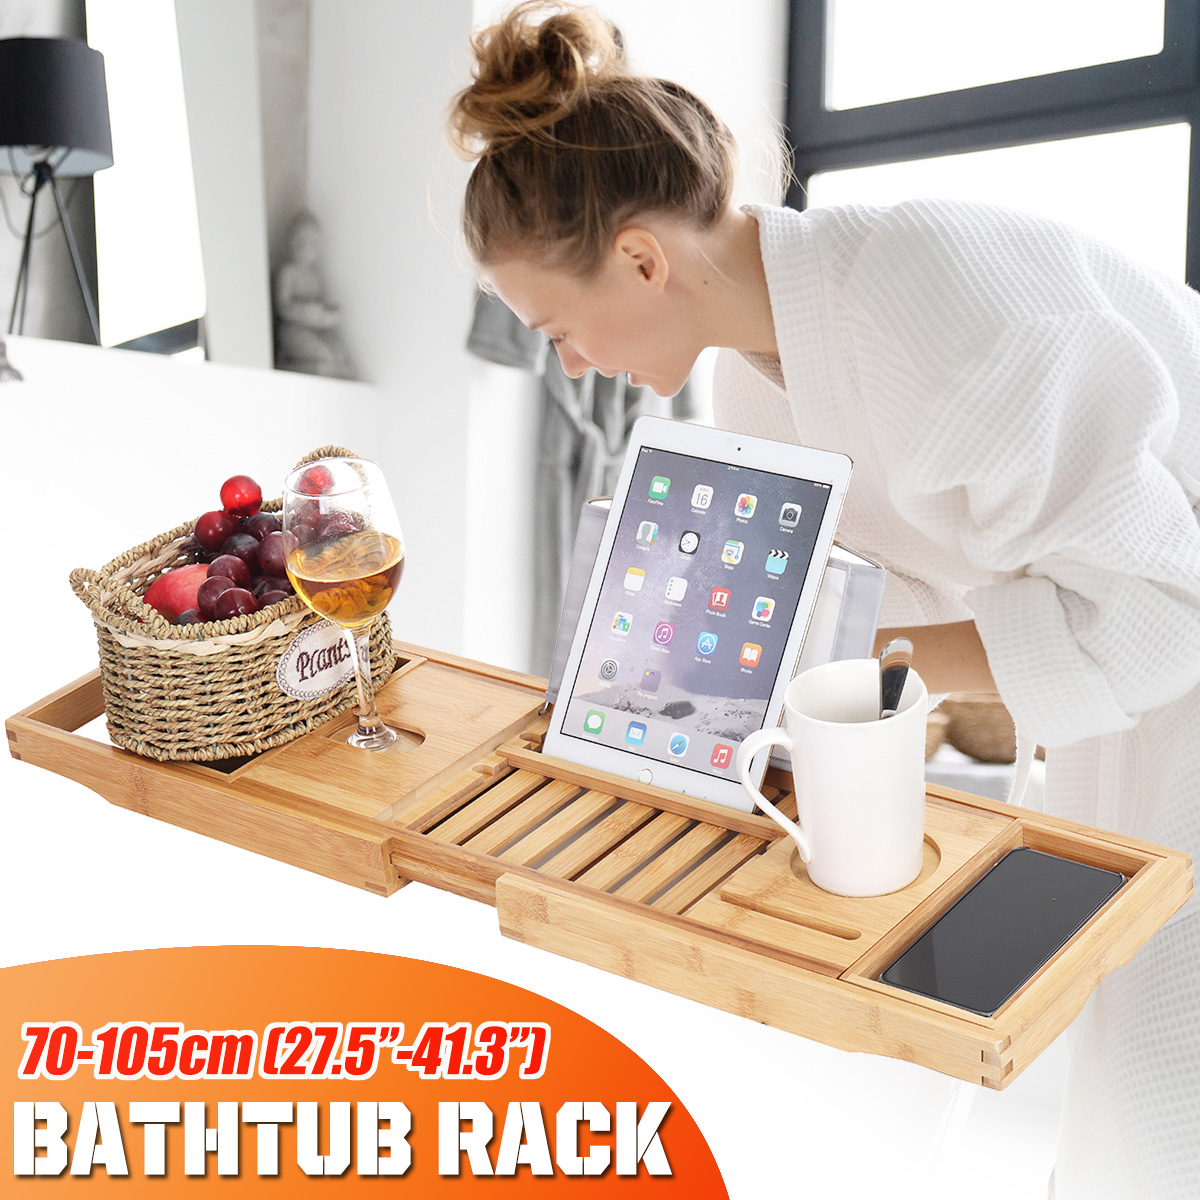 Luxury-Adjustable-Bathtub-Rack-Bamboo-Caddy-Shelf-Shower-Tub-Tray-Towel-Mobile-Phone-Tablet-Holder-S-1794315-3